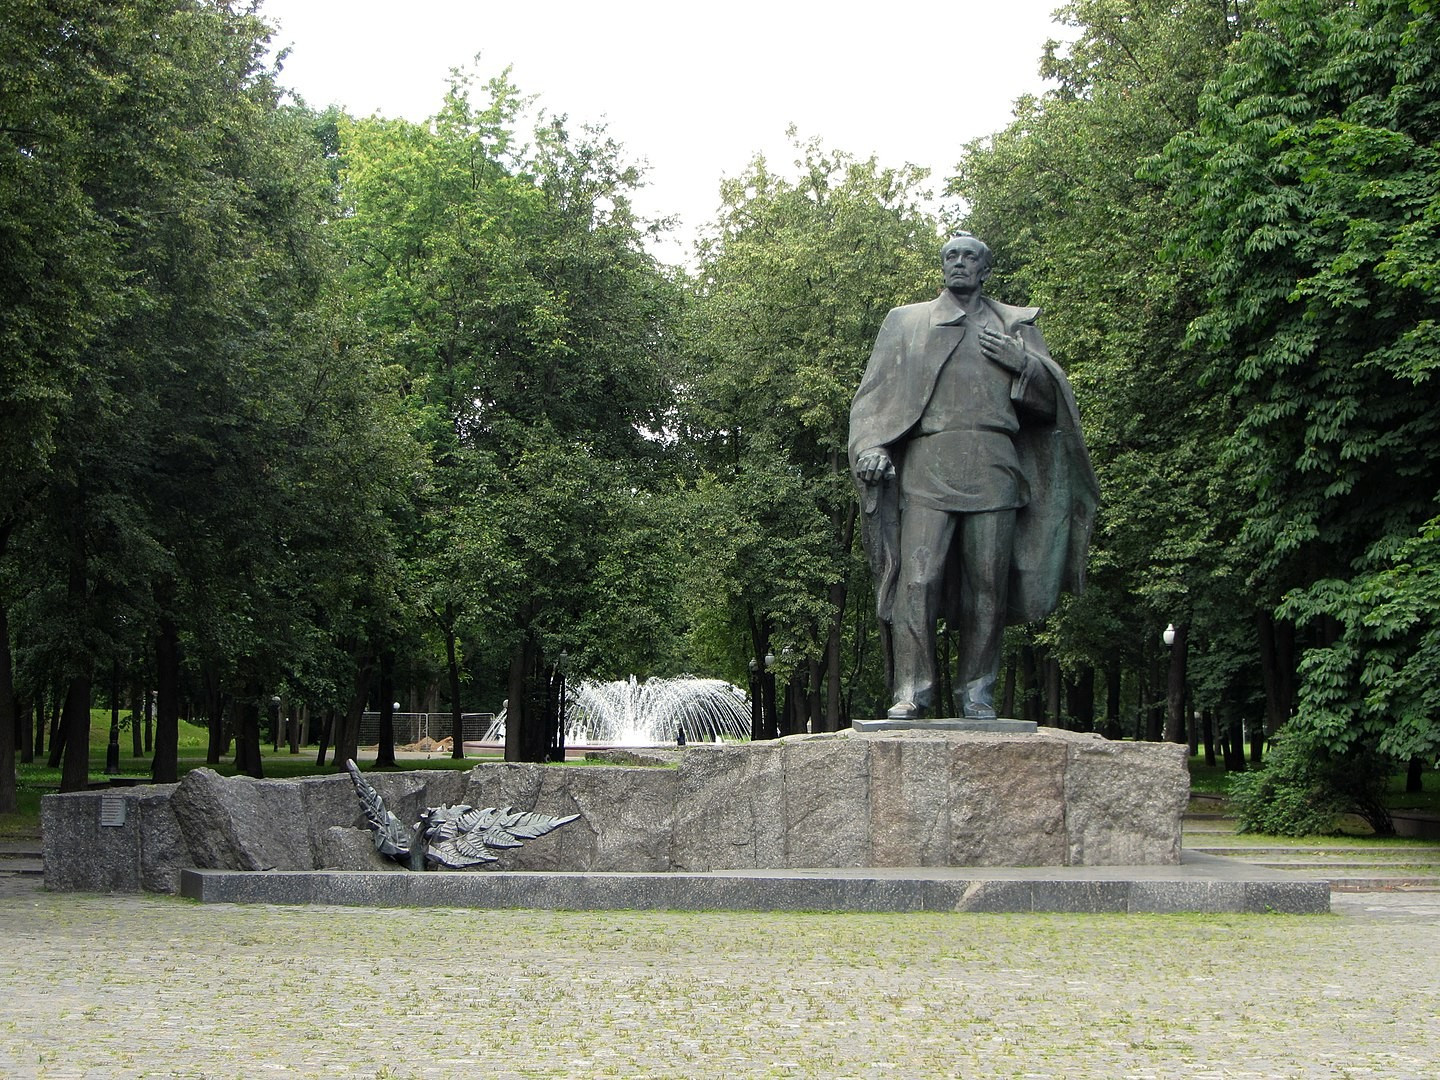 Автор: Liashko - File:Pomnik Janku Kupału, Miensk.JPG, CC BY-SA 3.0, https://ru.wikipedia.org/w/index.php?curid=7657230